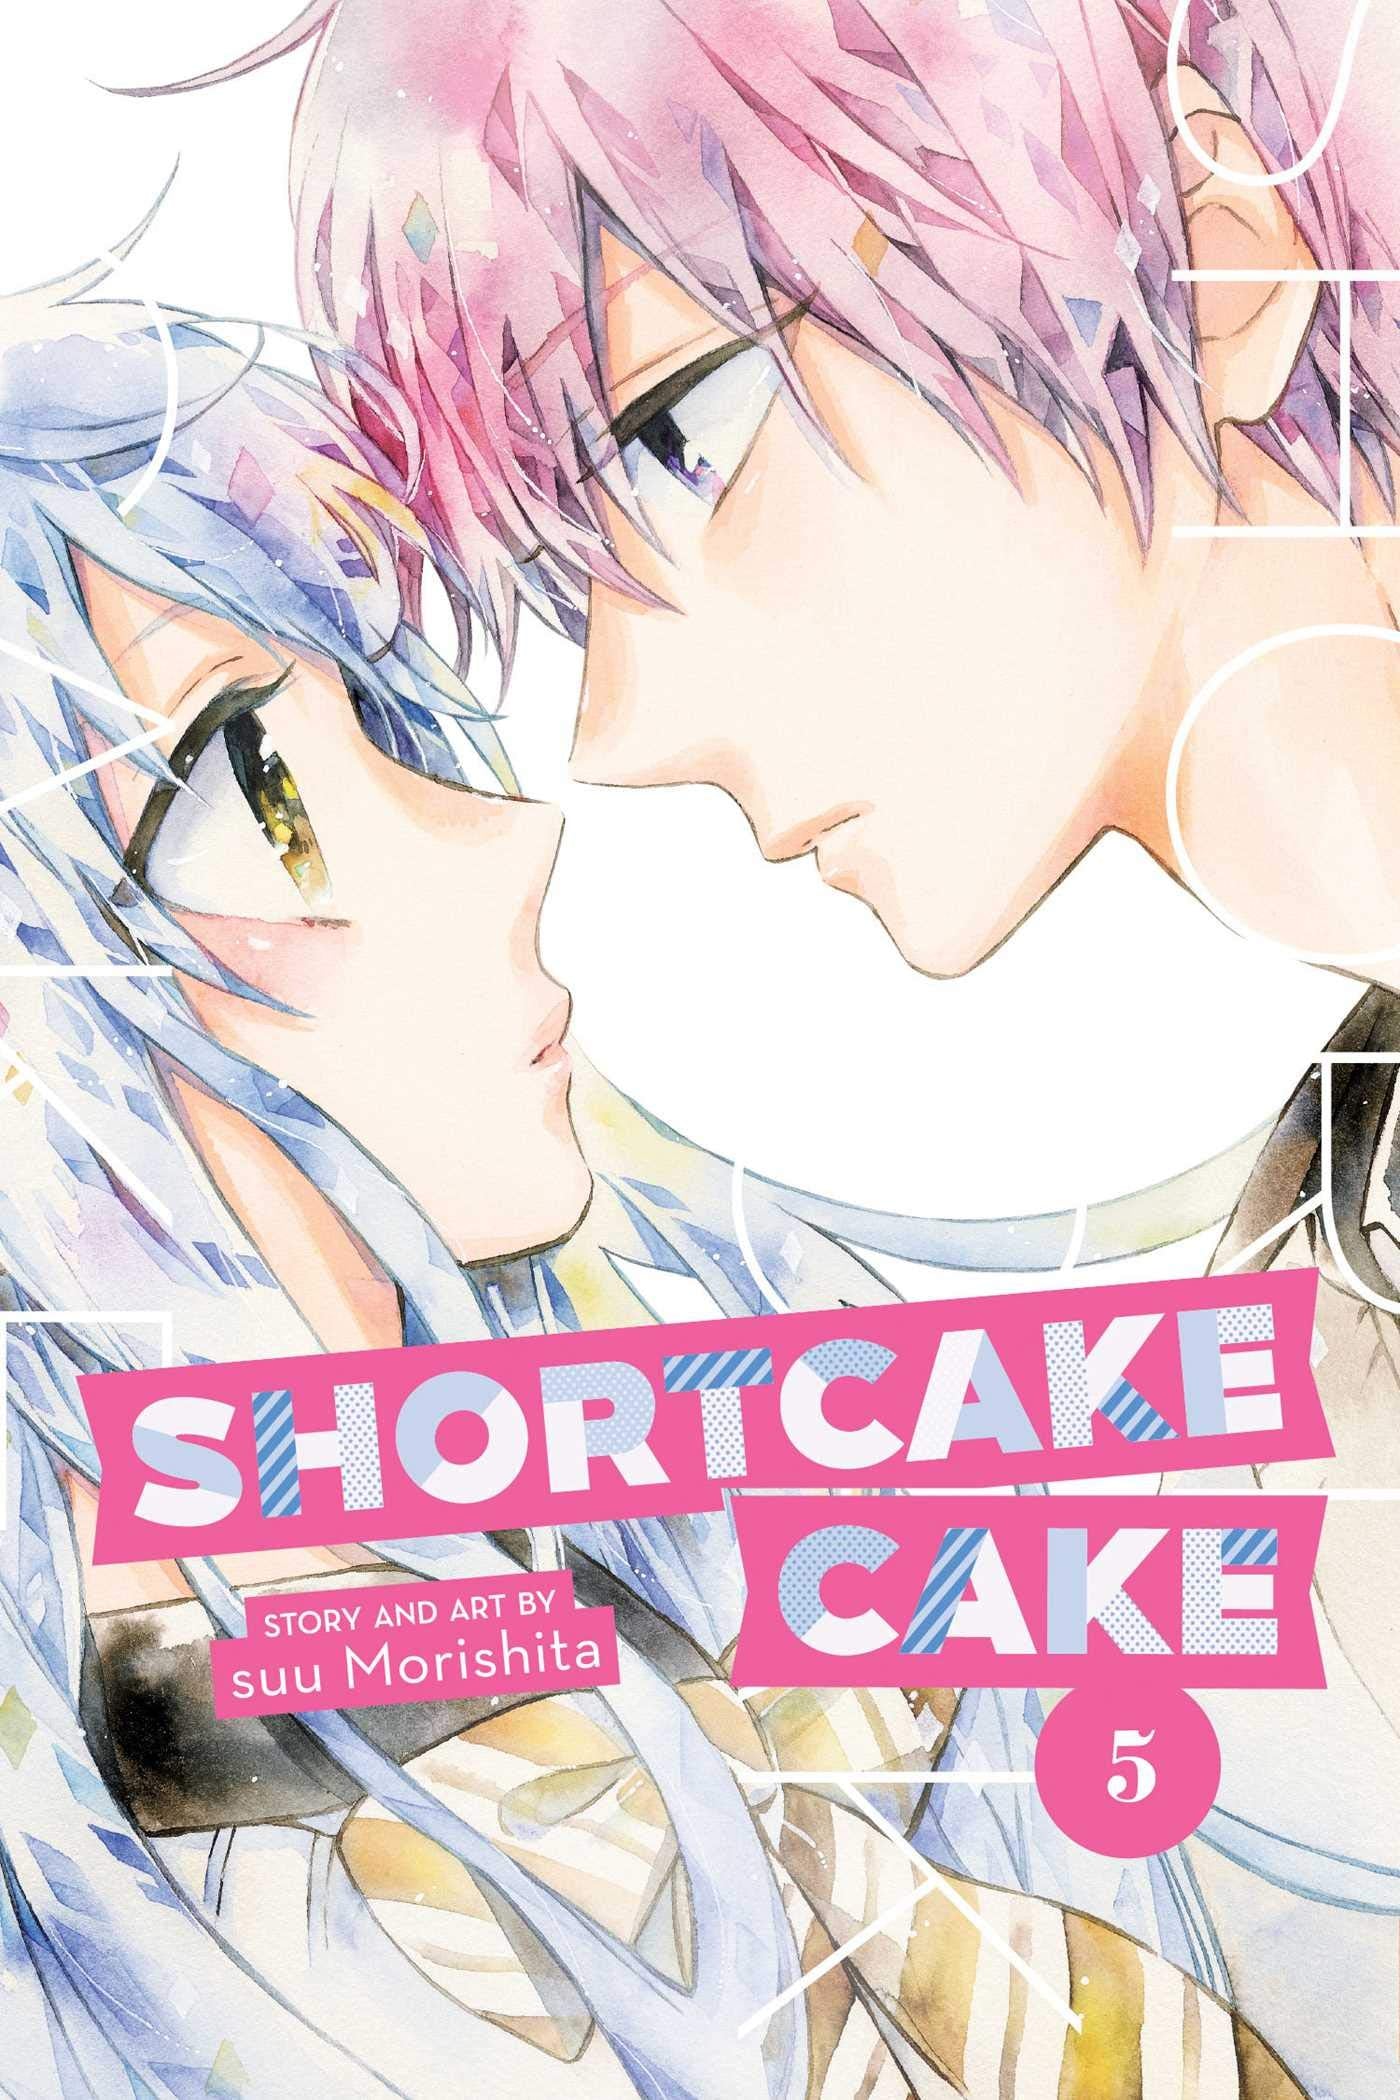 SHORTCAKE CAKE GN VOL 05